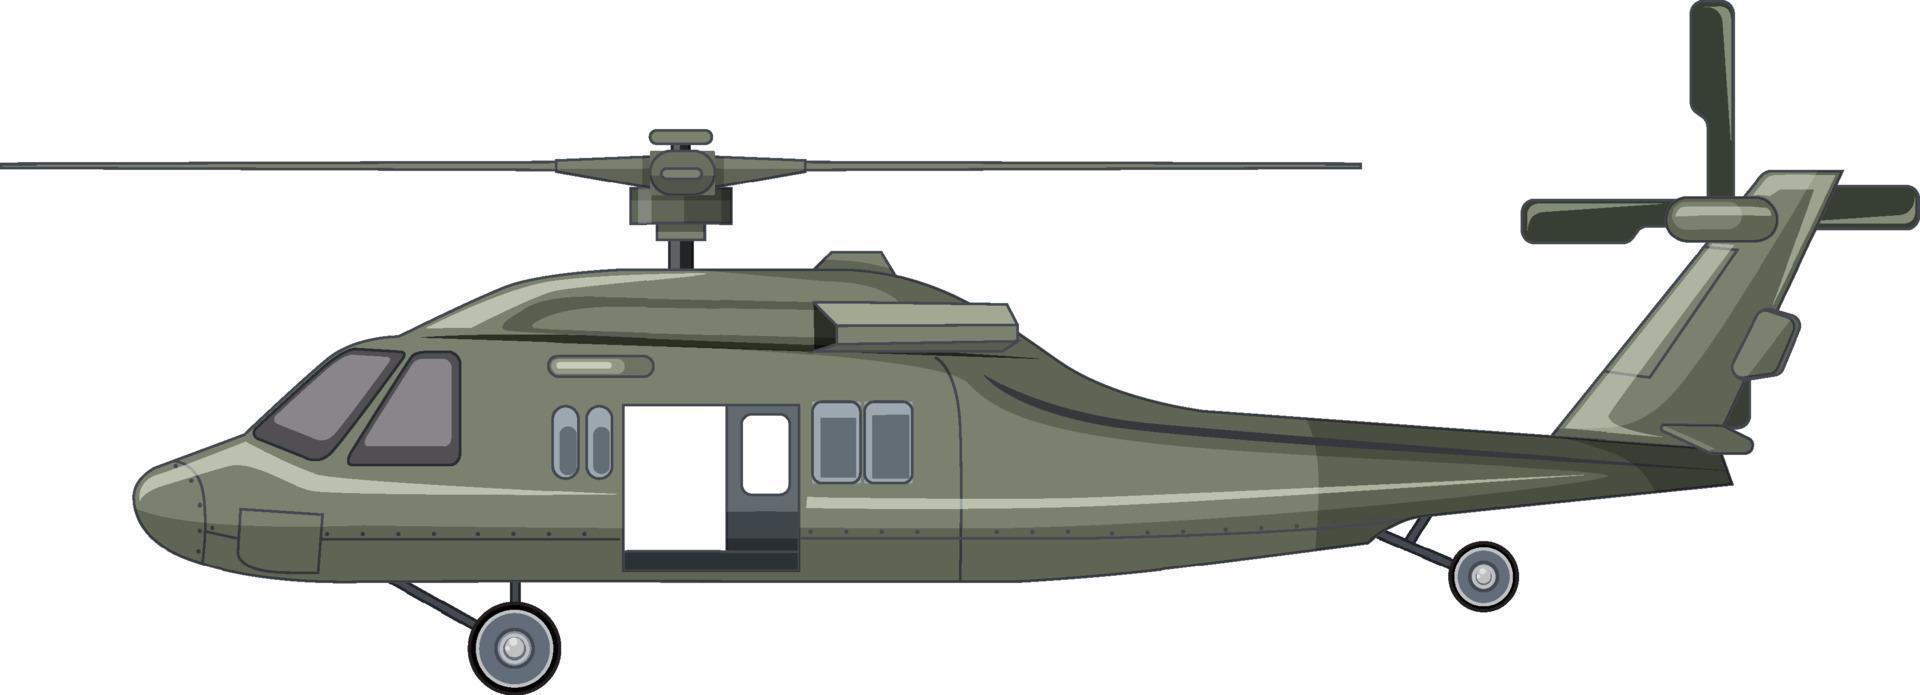 un helicóptero militar sobre fondo blanco vector